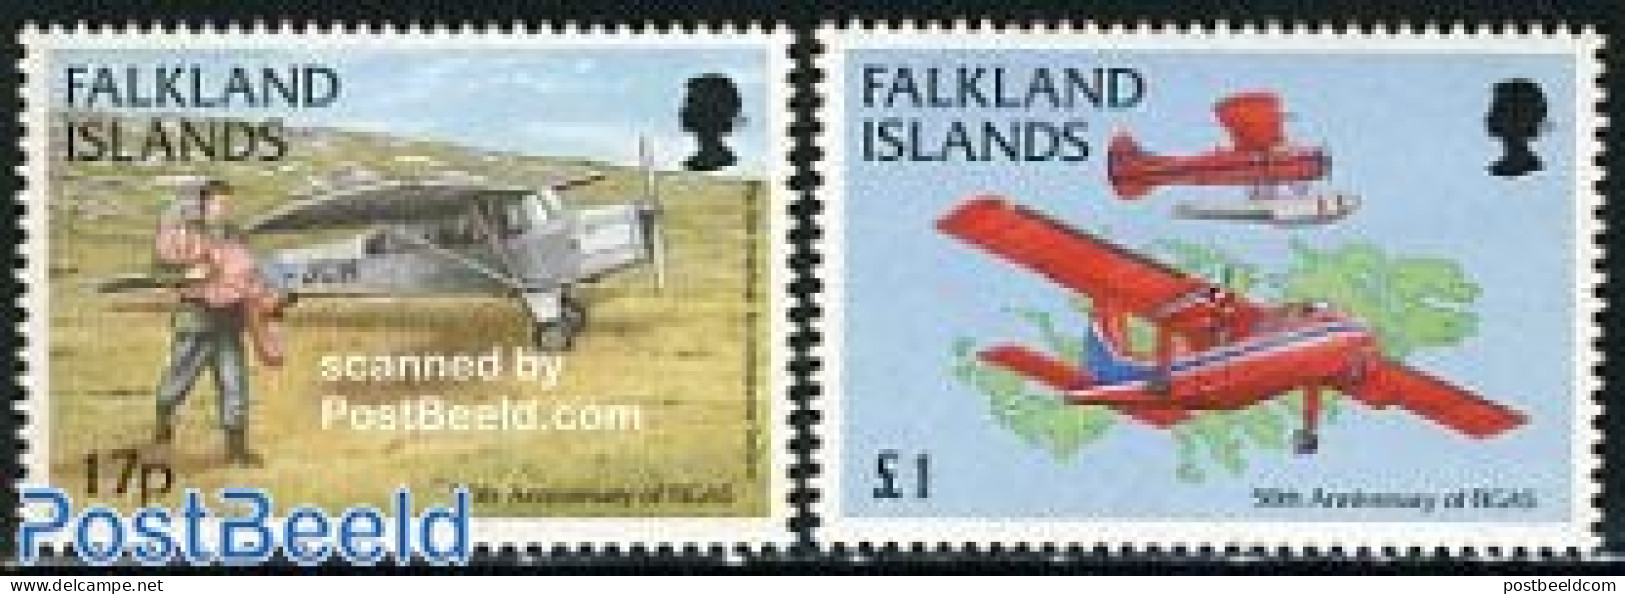 Falkland Islands 1998 FIGAS 2v, Mint NH, Transport - Aircraft & Aviation - Avions